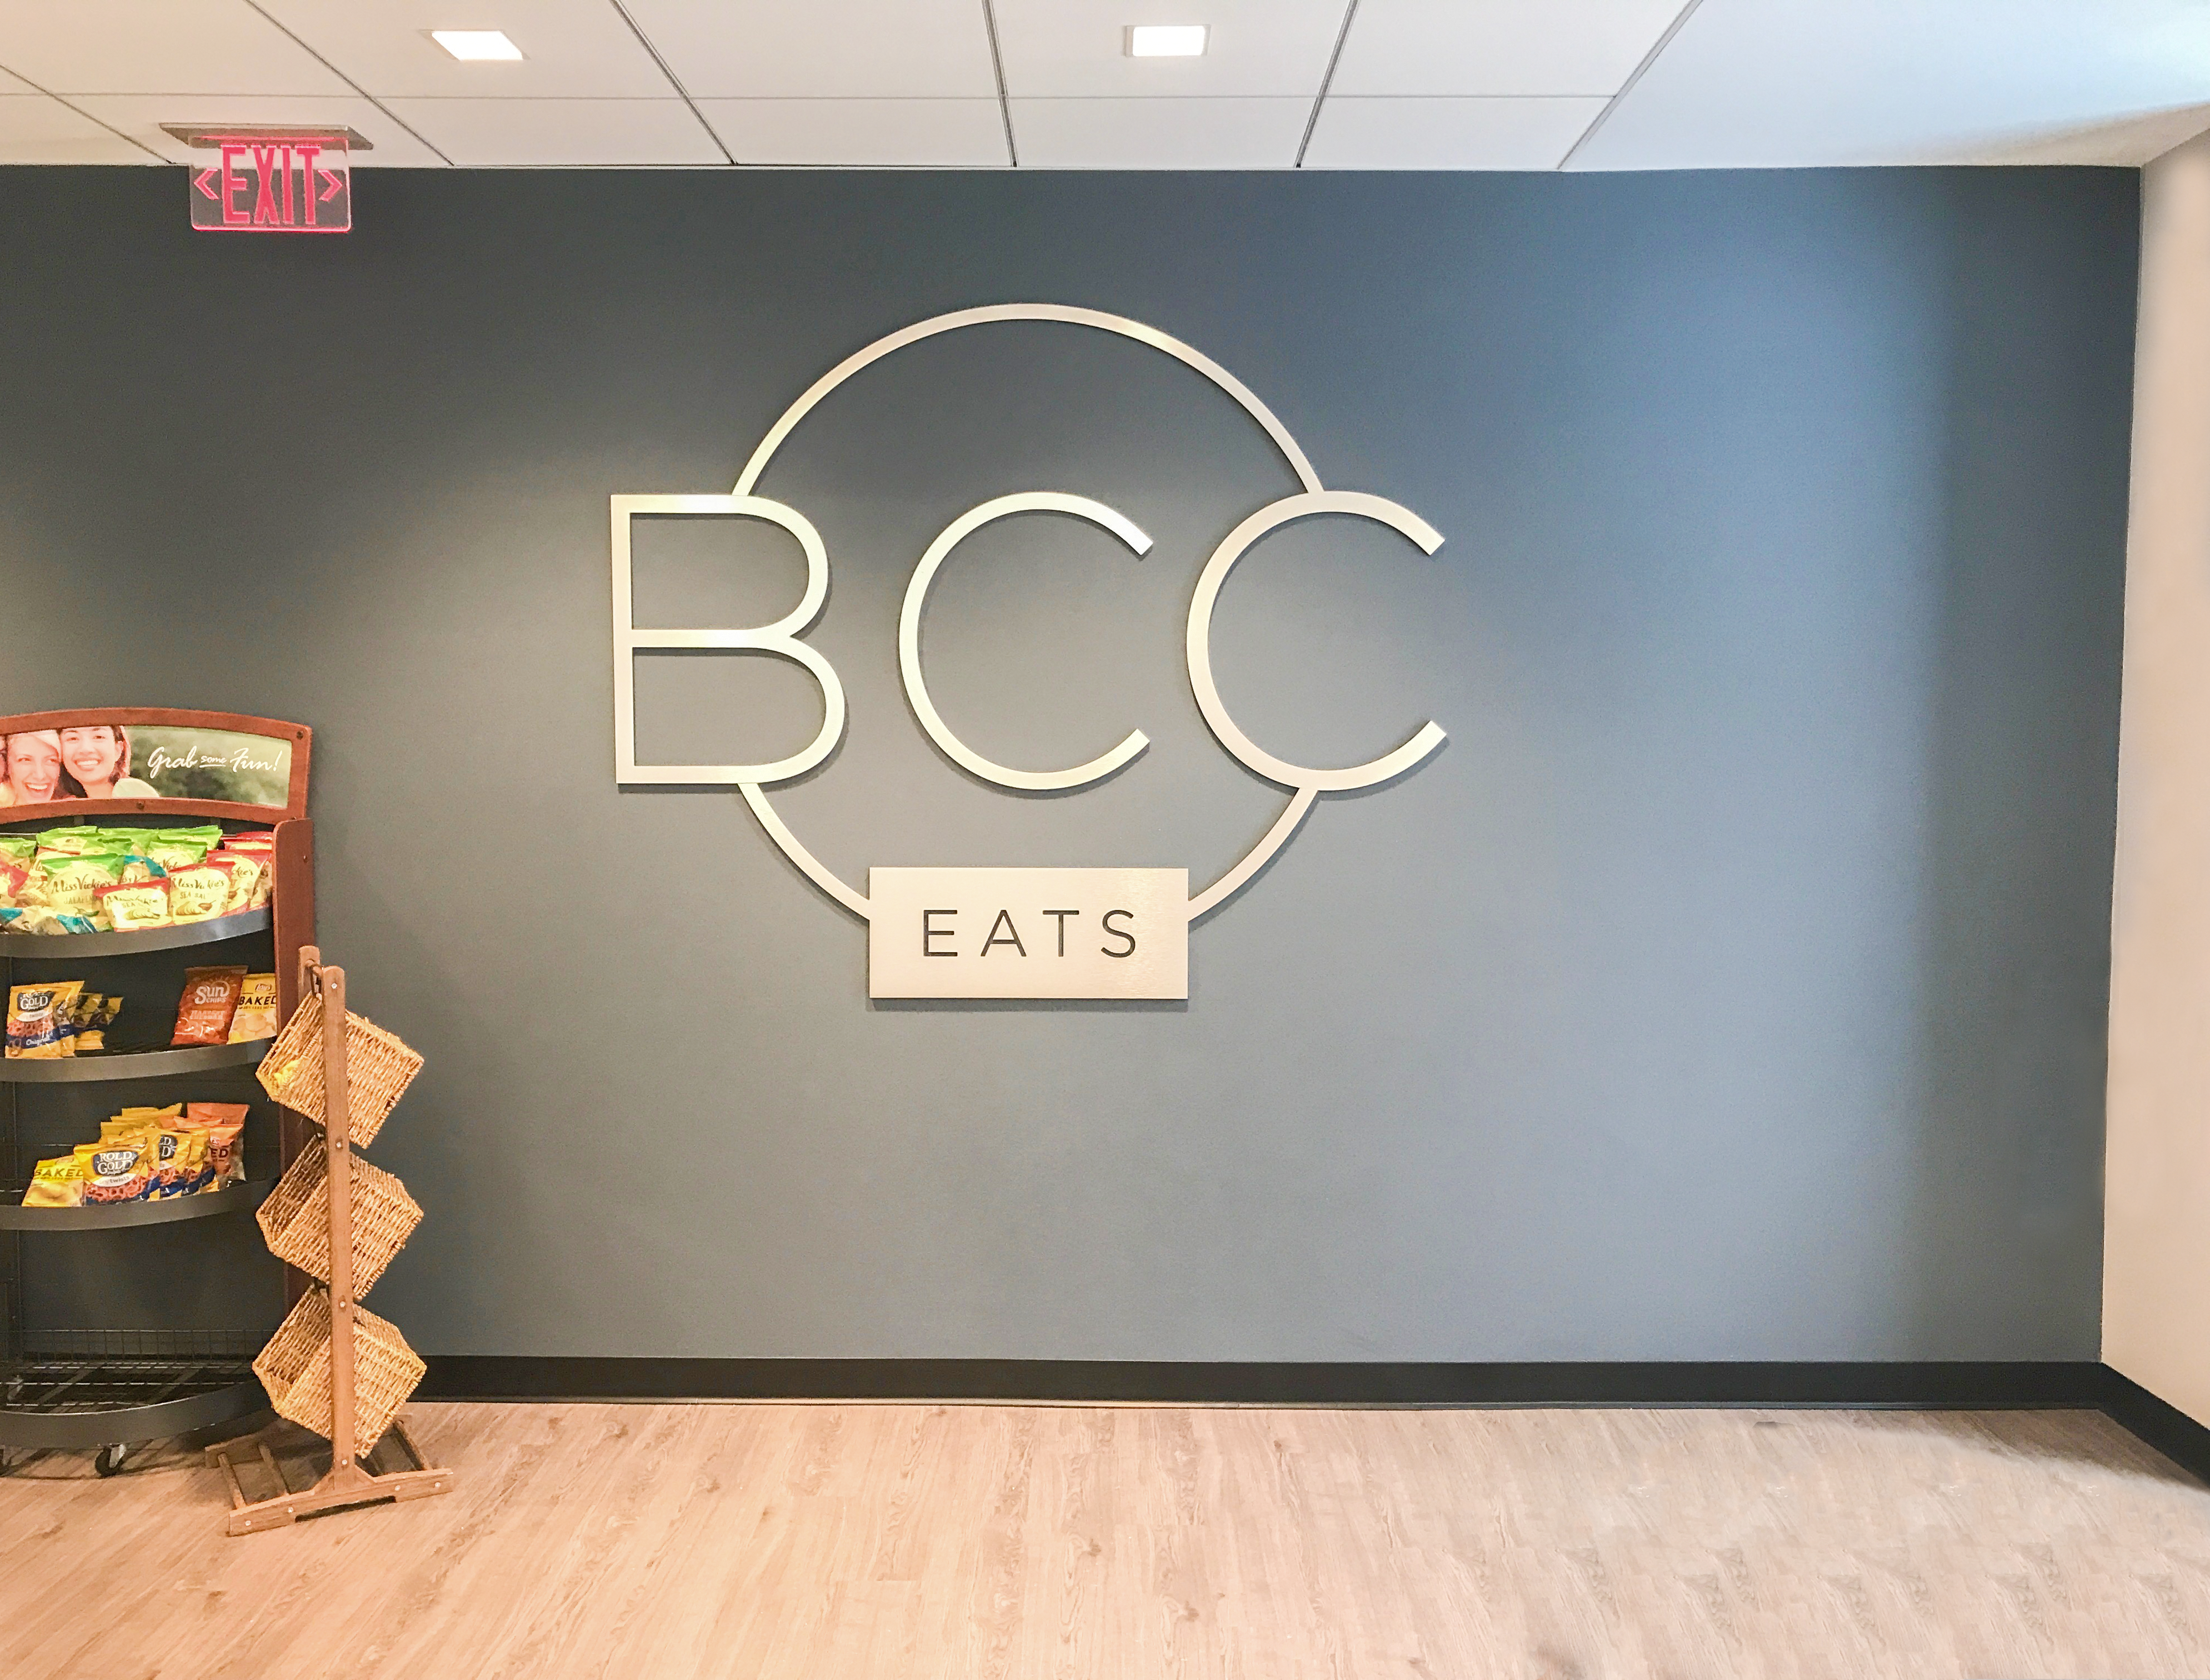 BCC Eats wall sign